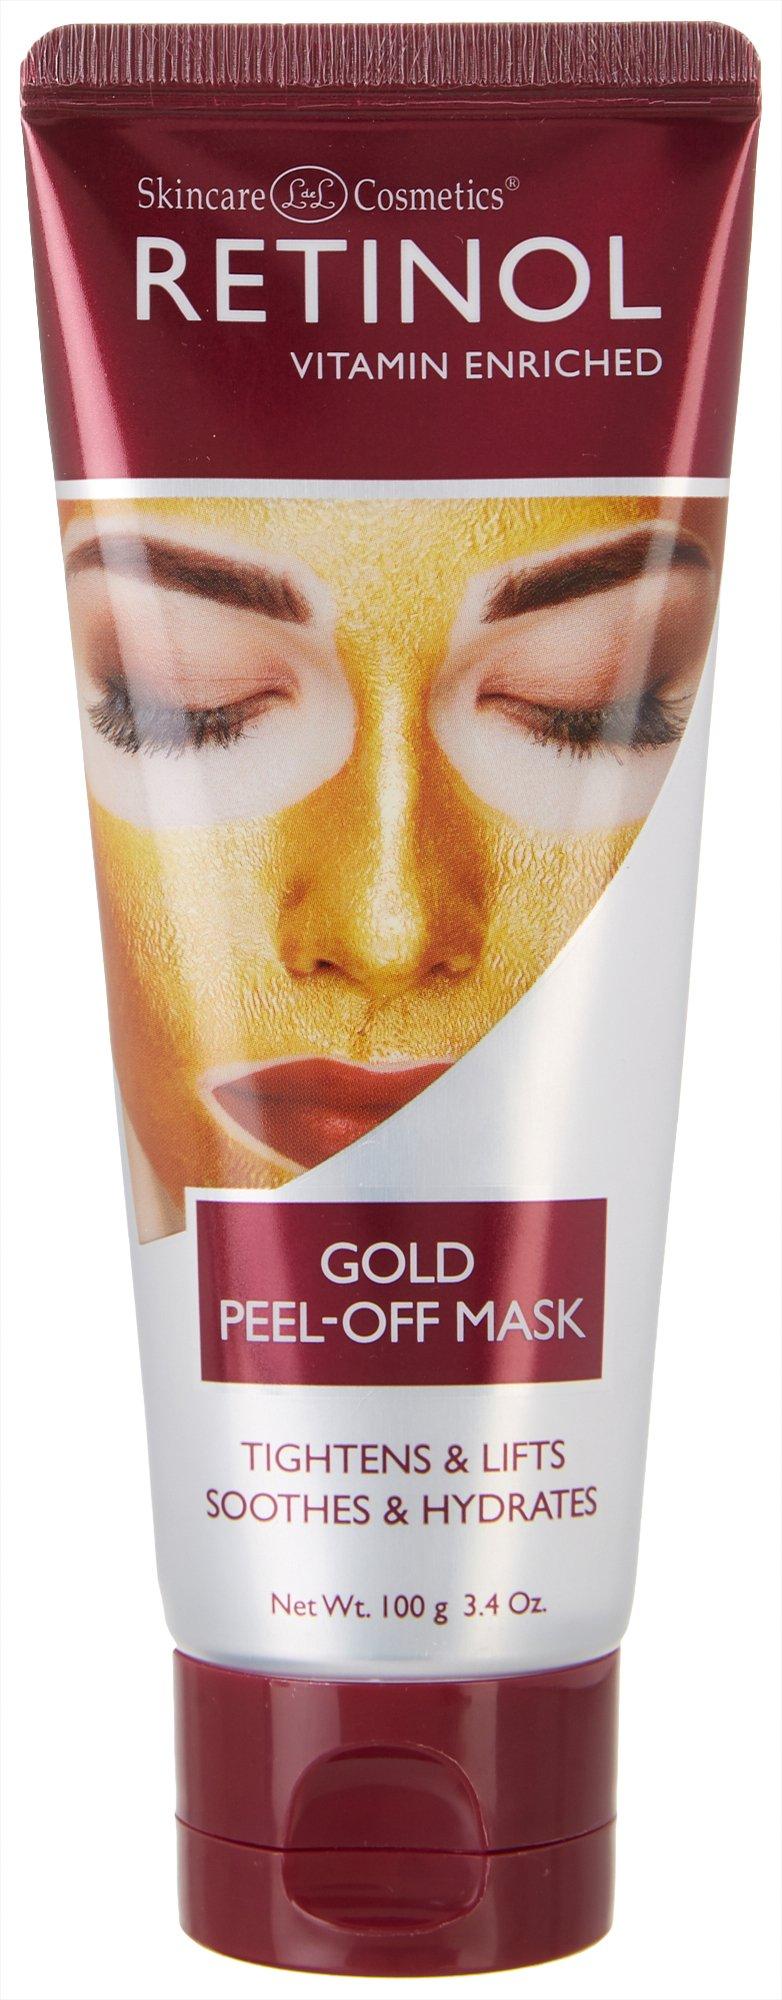 3.4 oz Gold Peel-Off Mask